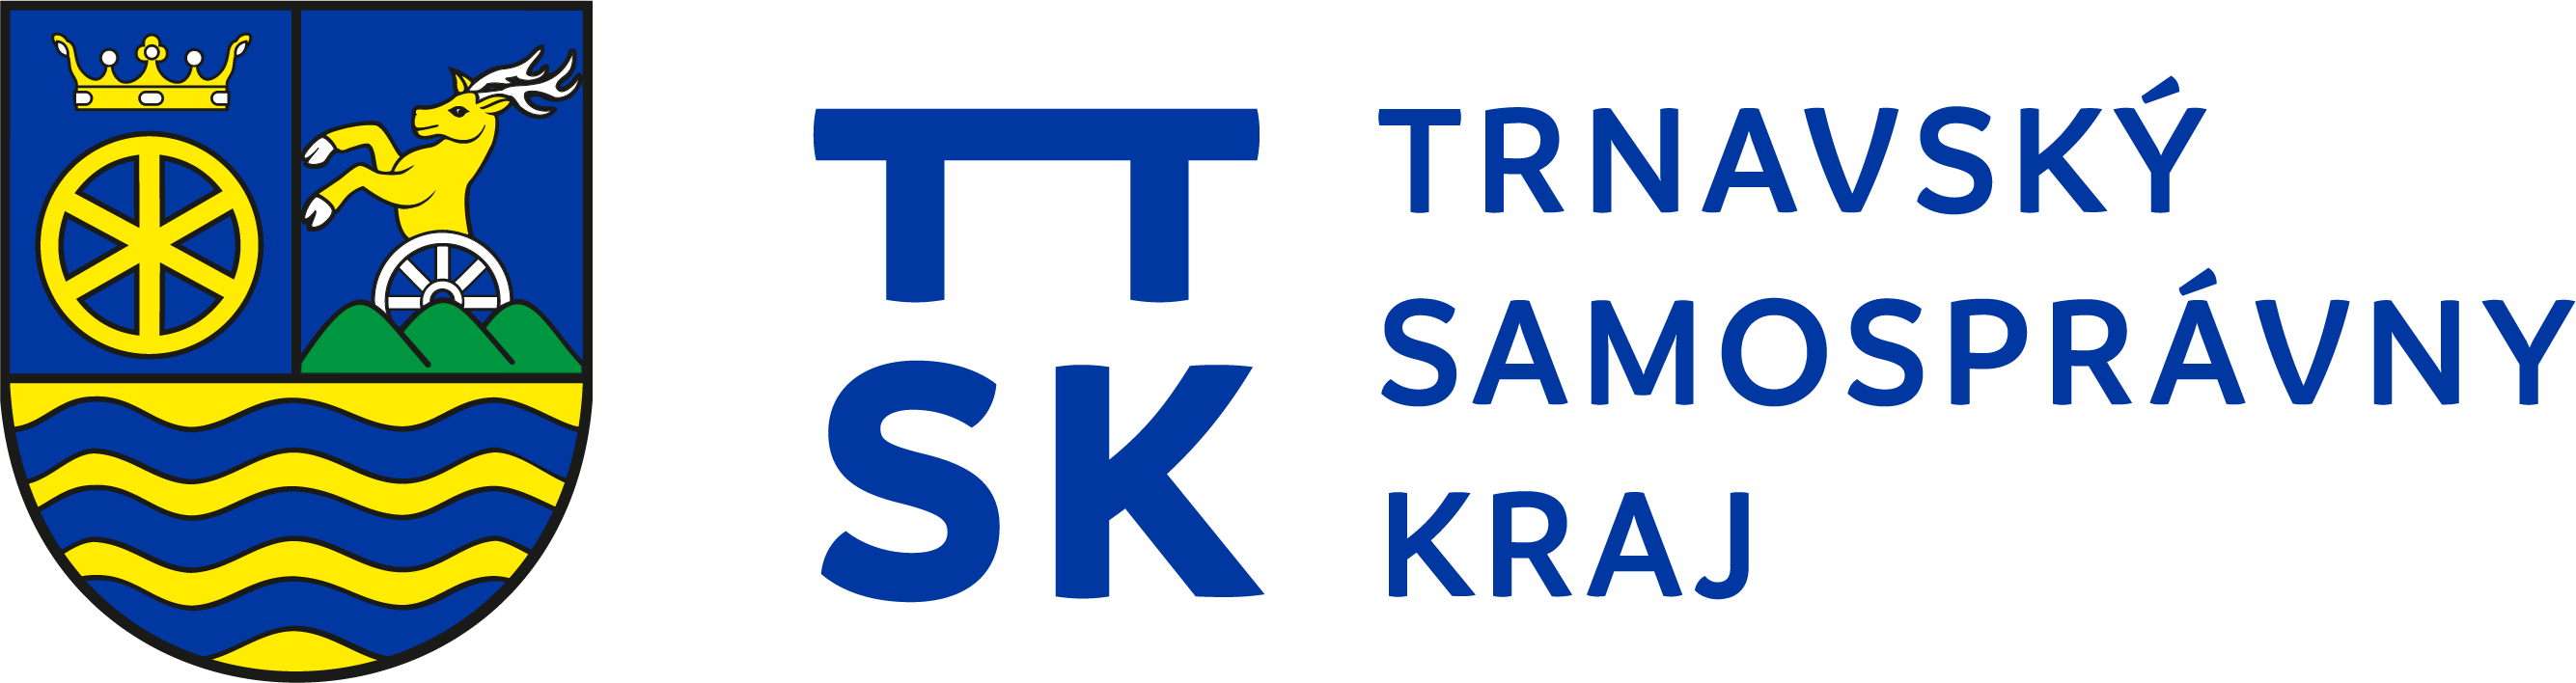 TTSK logo